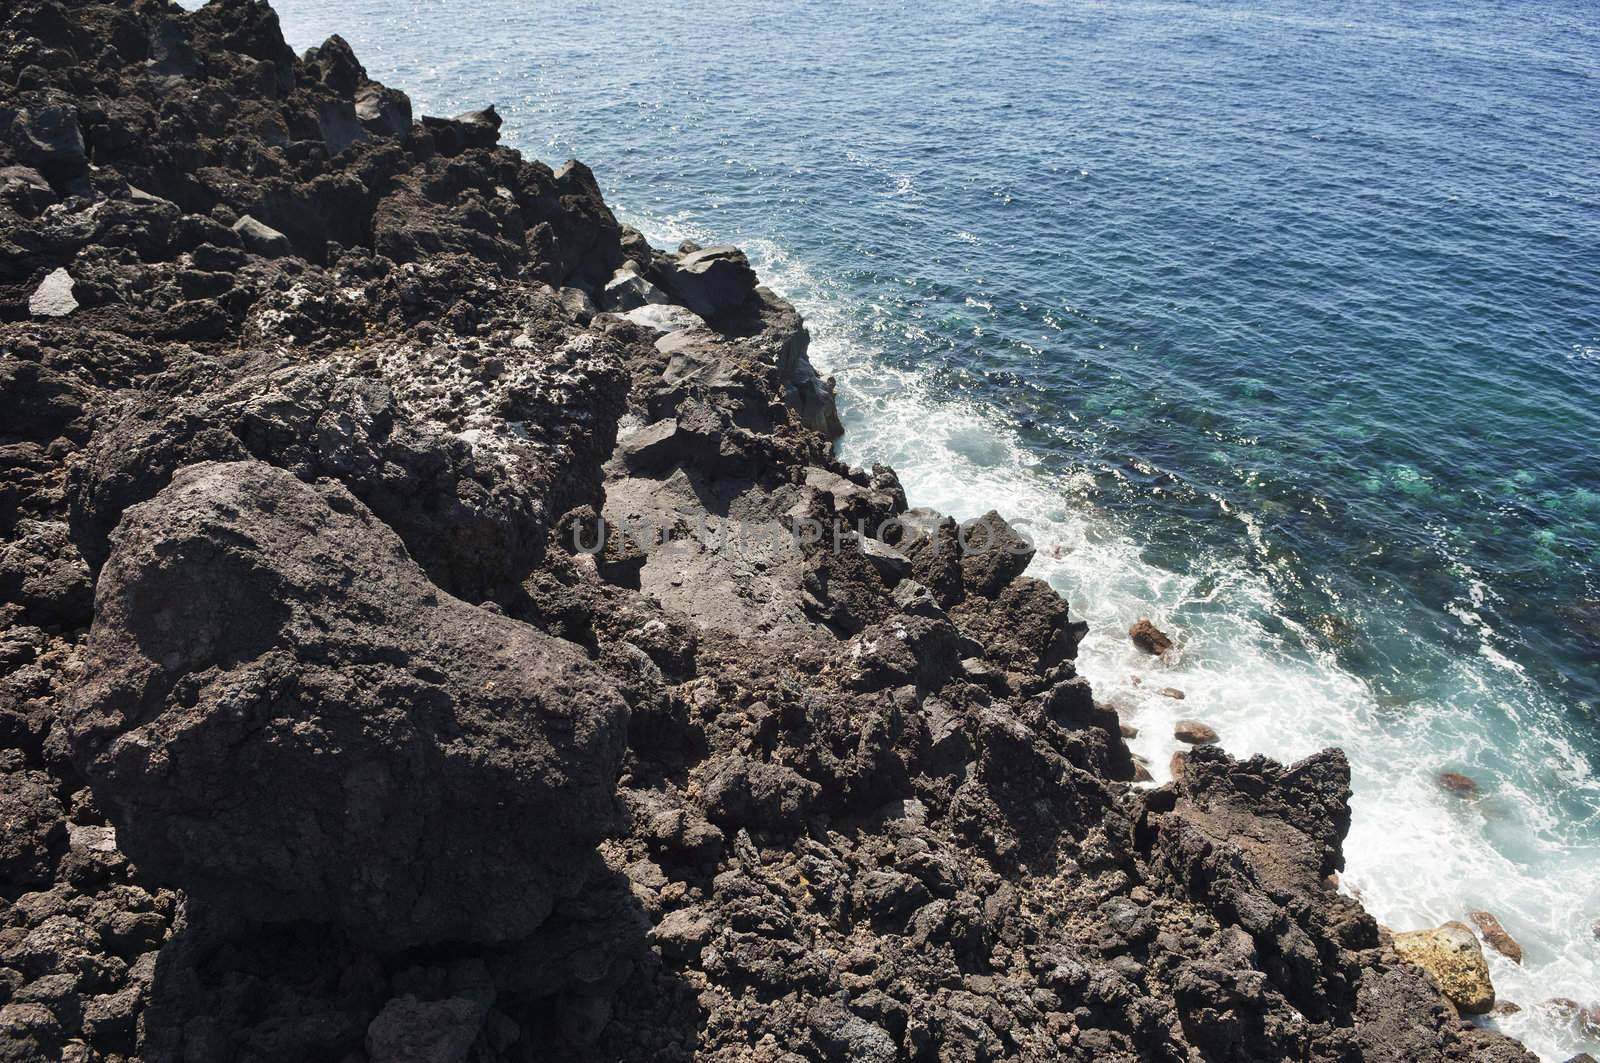 Volcanic rock in Pico island coastline, Azores